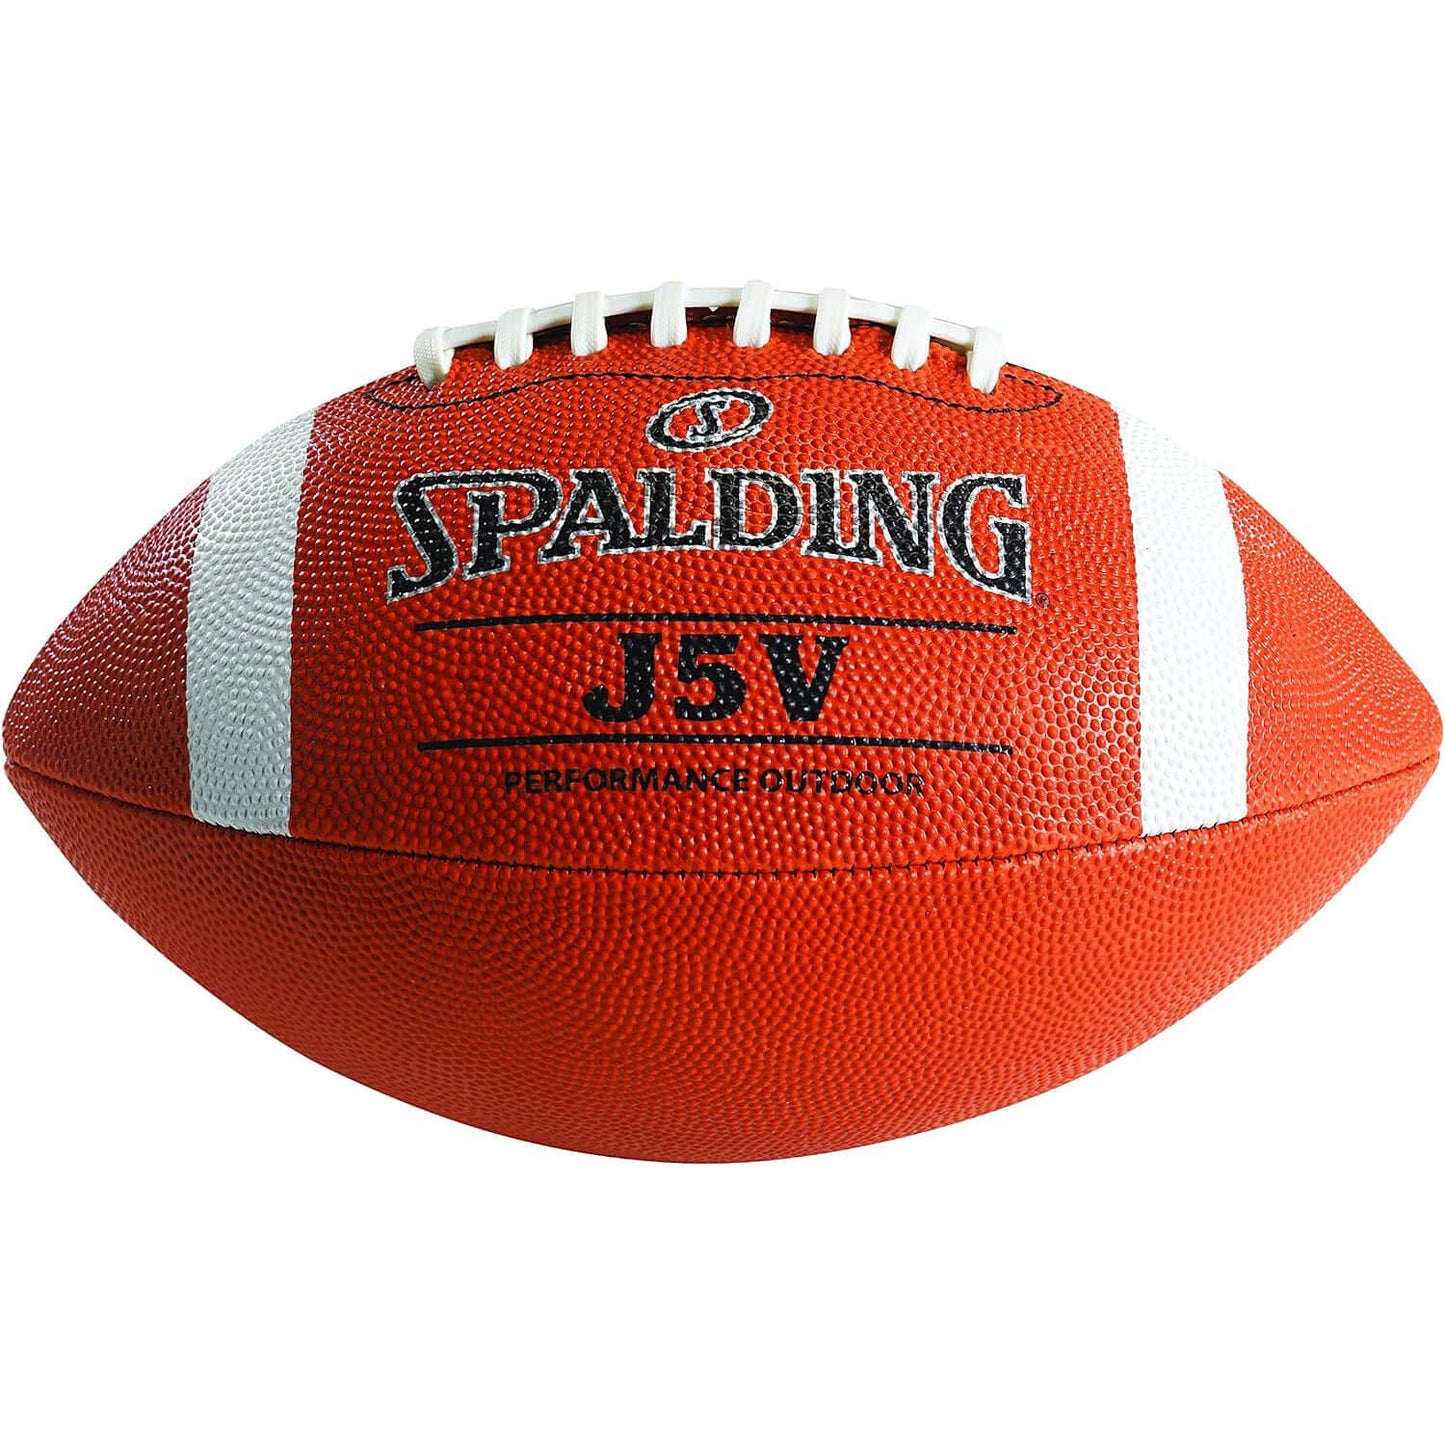 Spalding Jpv Full Size Rubber